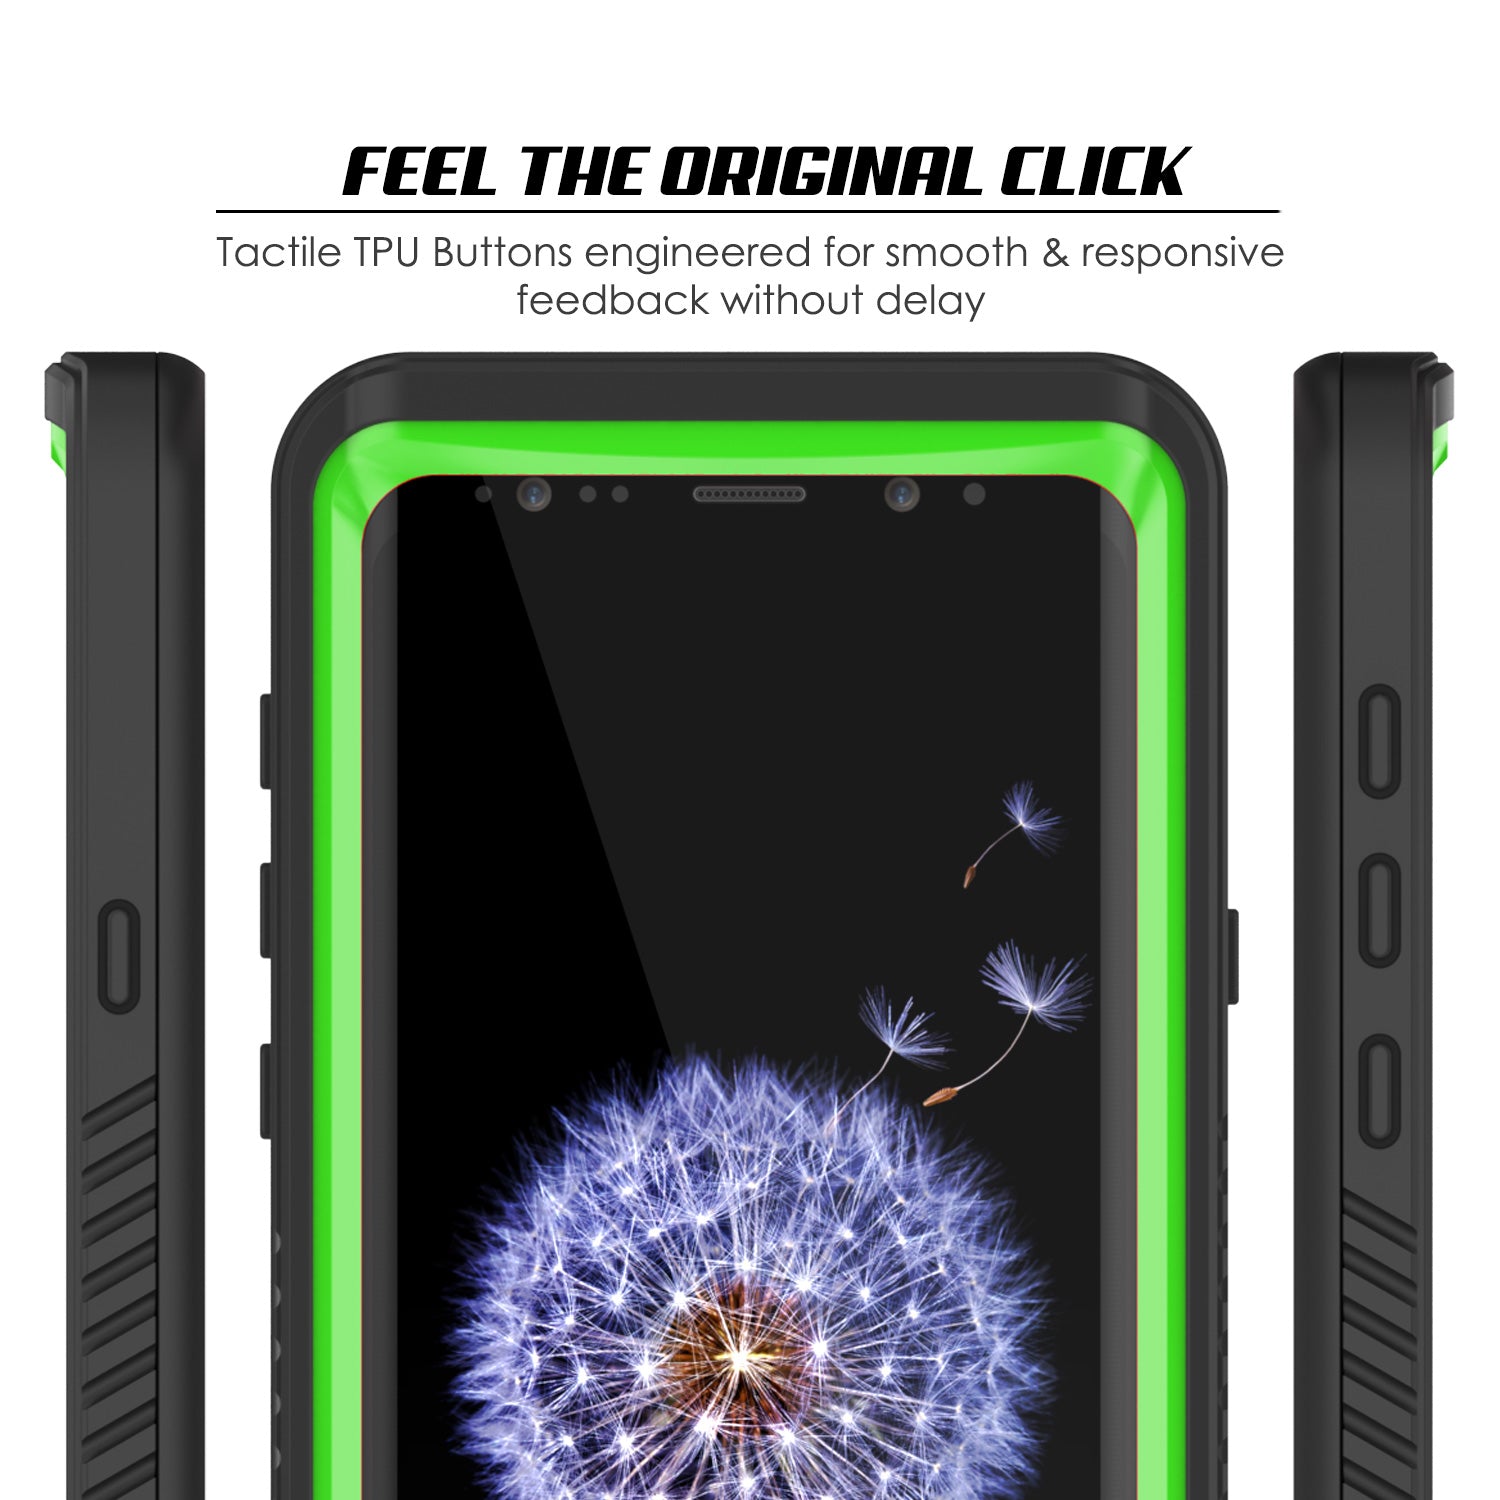 Punkcase Galaxy S9+ Plus Extreme Series Waterproof Body | Light Green